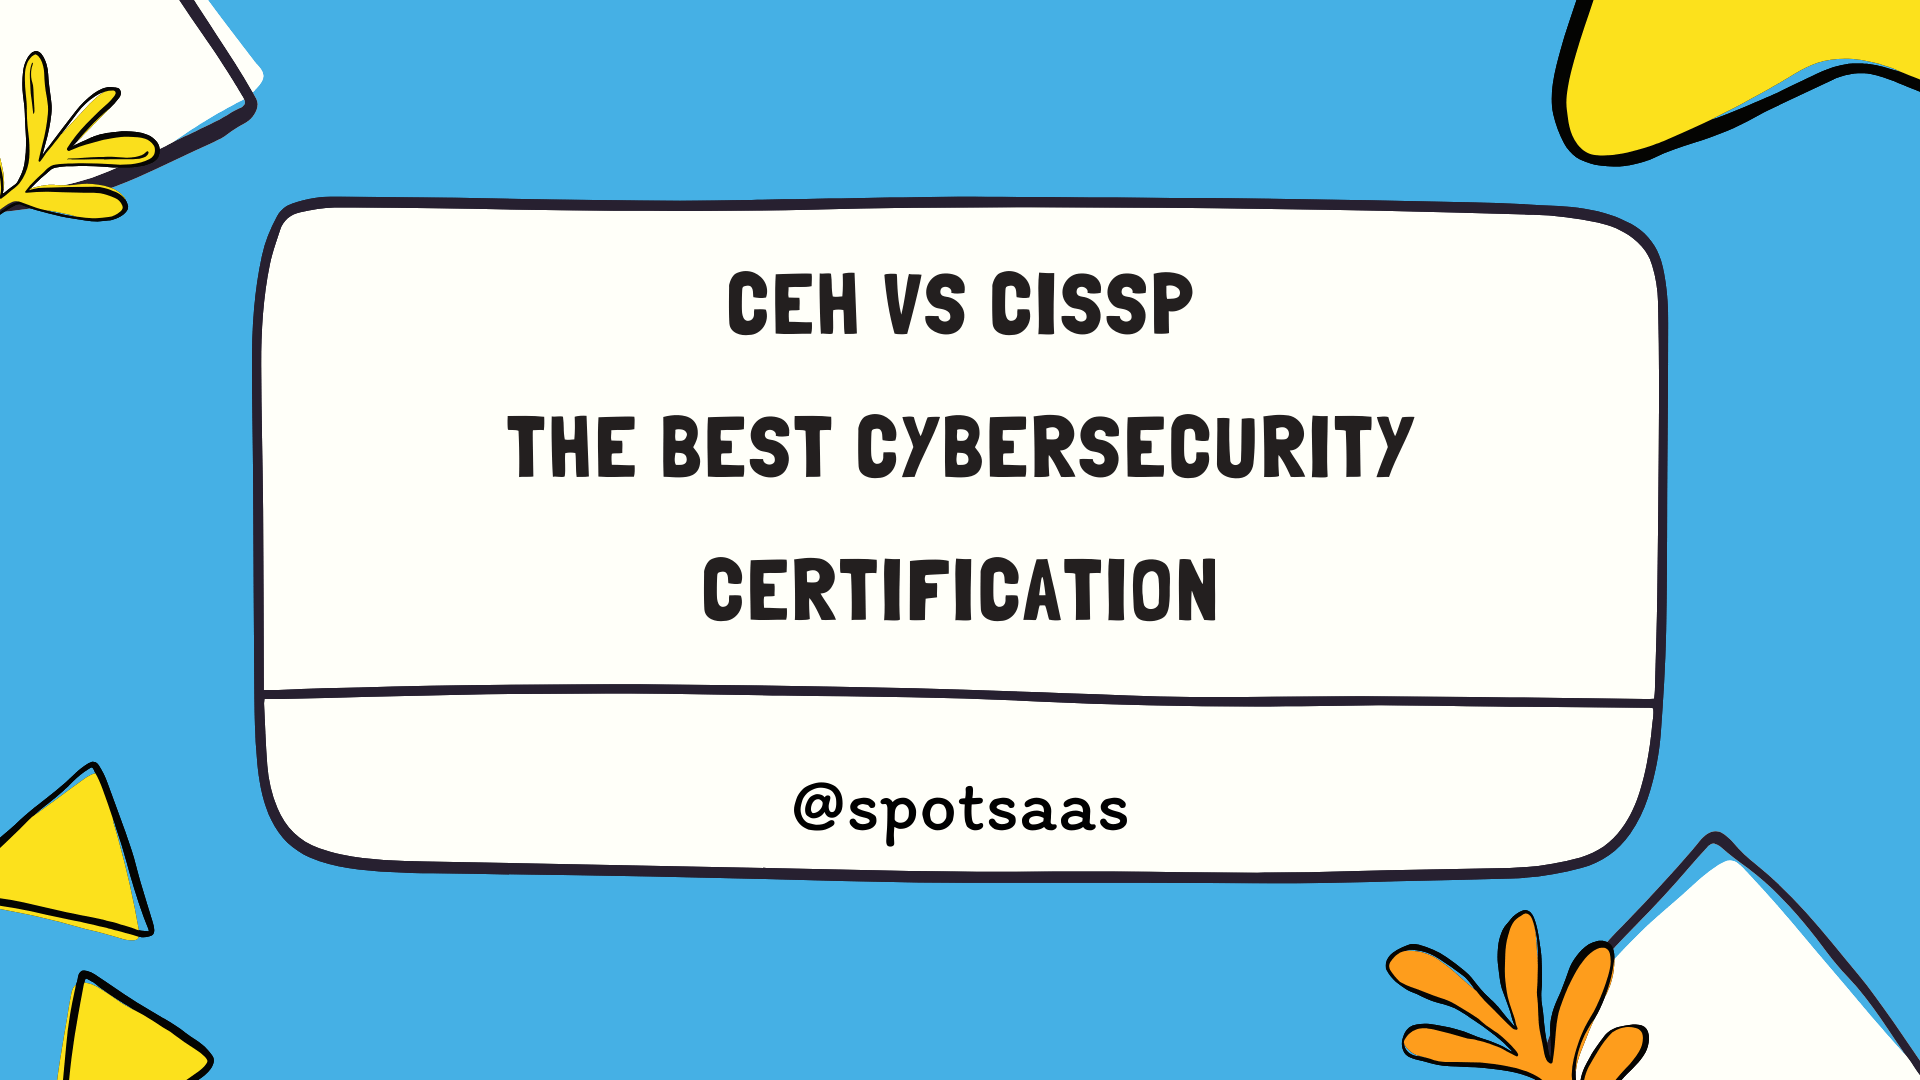 CEH vs CISSP